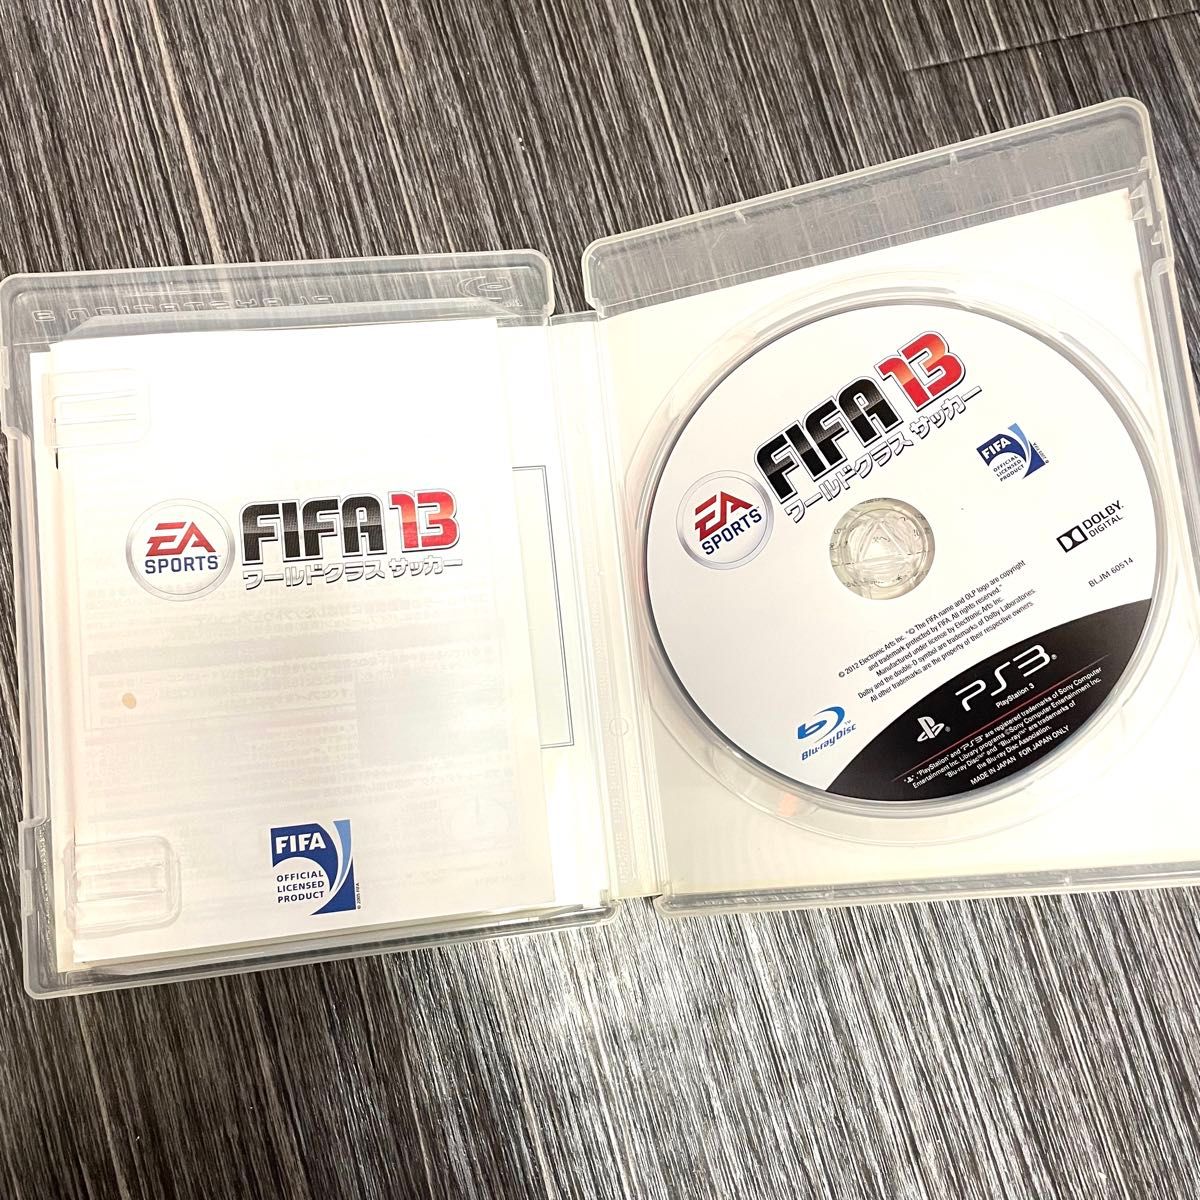 PS3 ソフト 2点セット ディスク綺麗です サッカー ゲームソフト 動作未確認